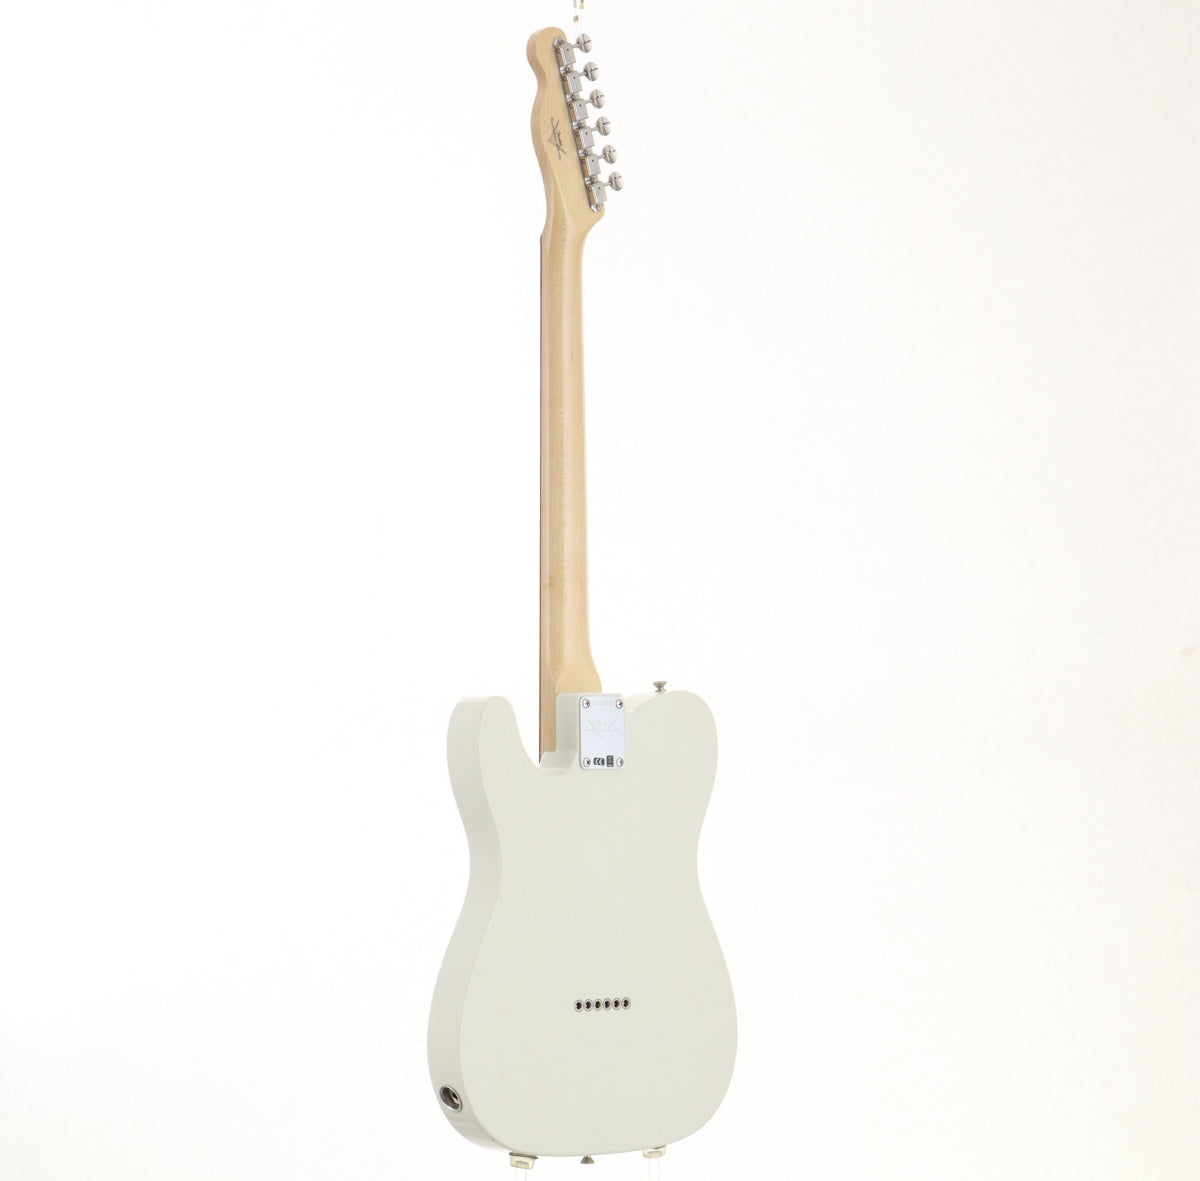 [SN CZ565685] USED Fender Custom Shop / 1960s Telecaster Lush Closet Classic Aged 55 Desert Tan [10]